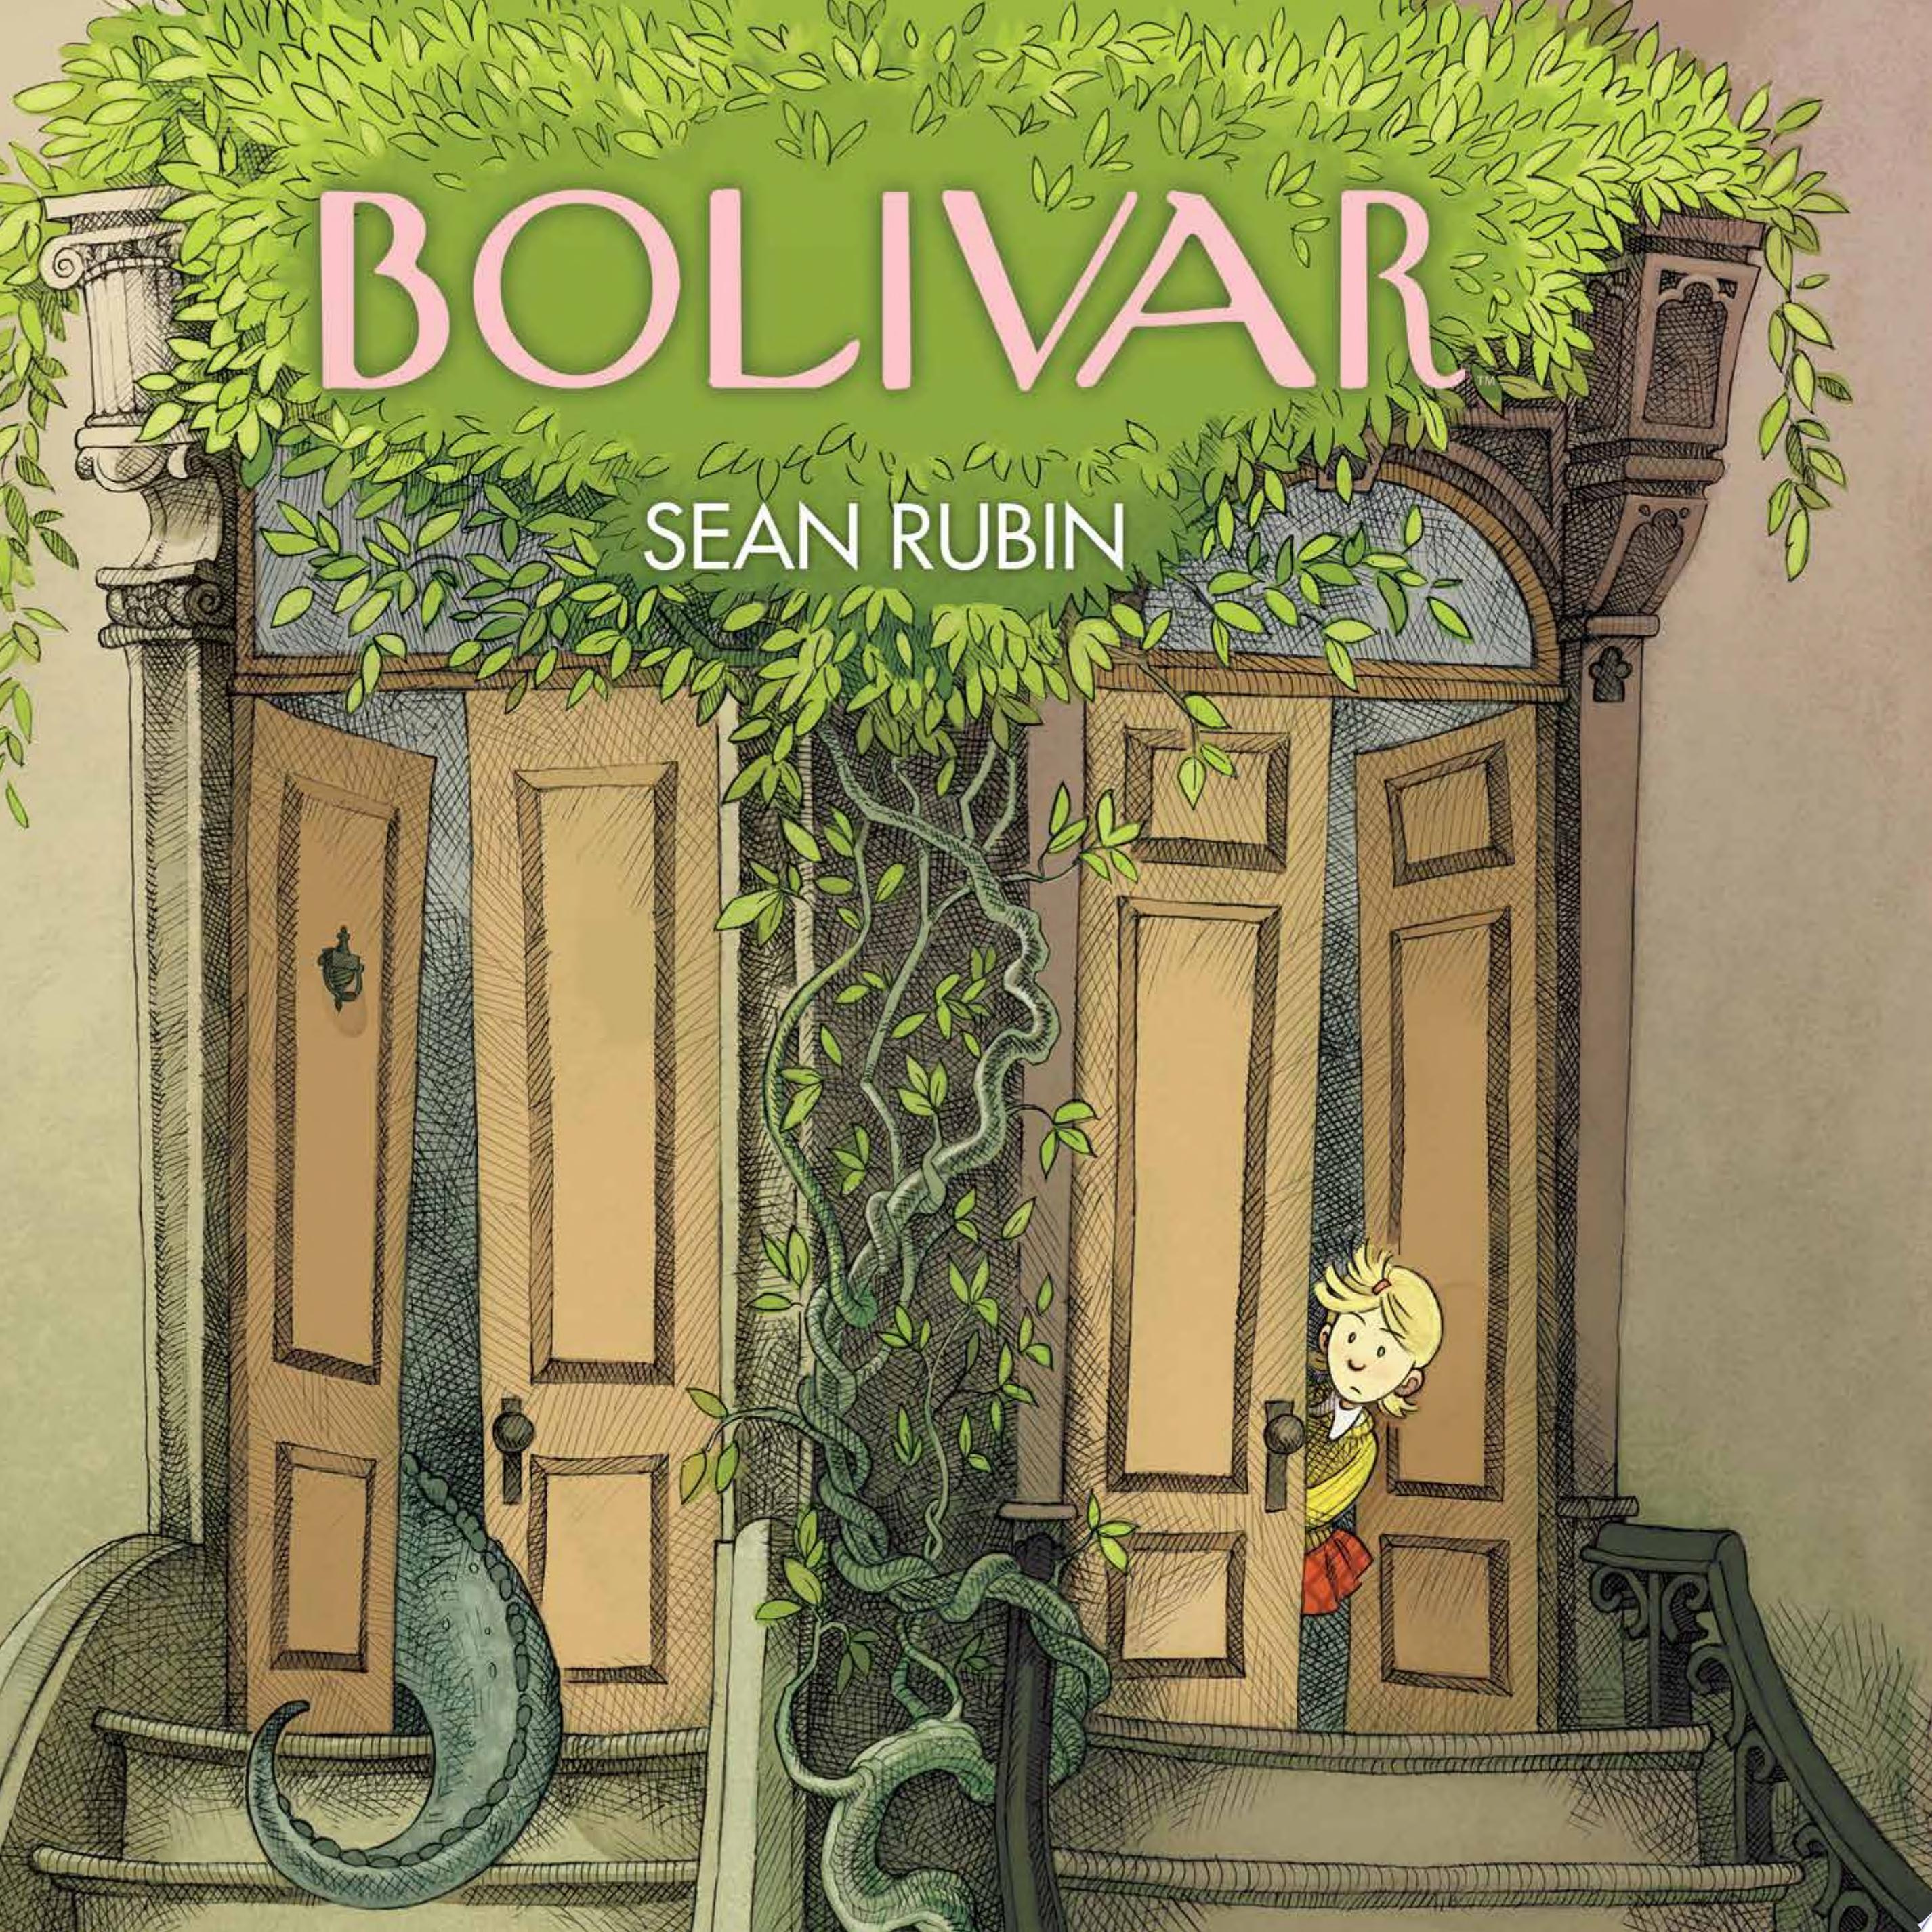 Image for "Bolivar"